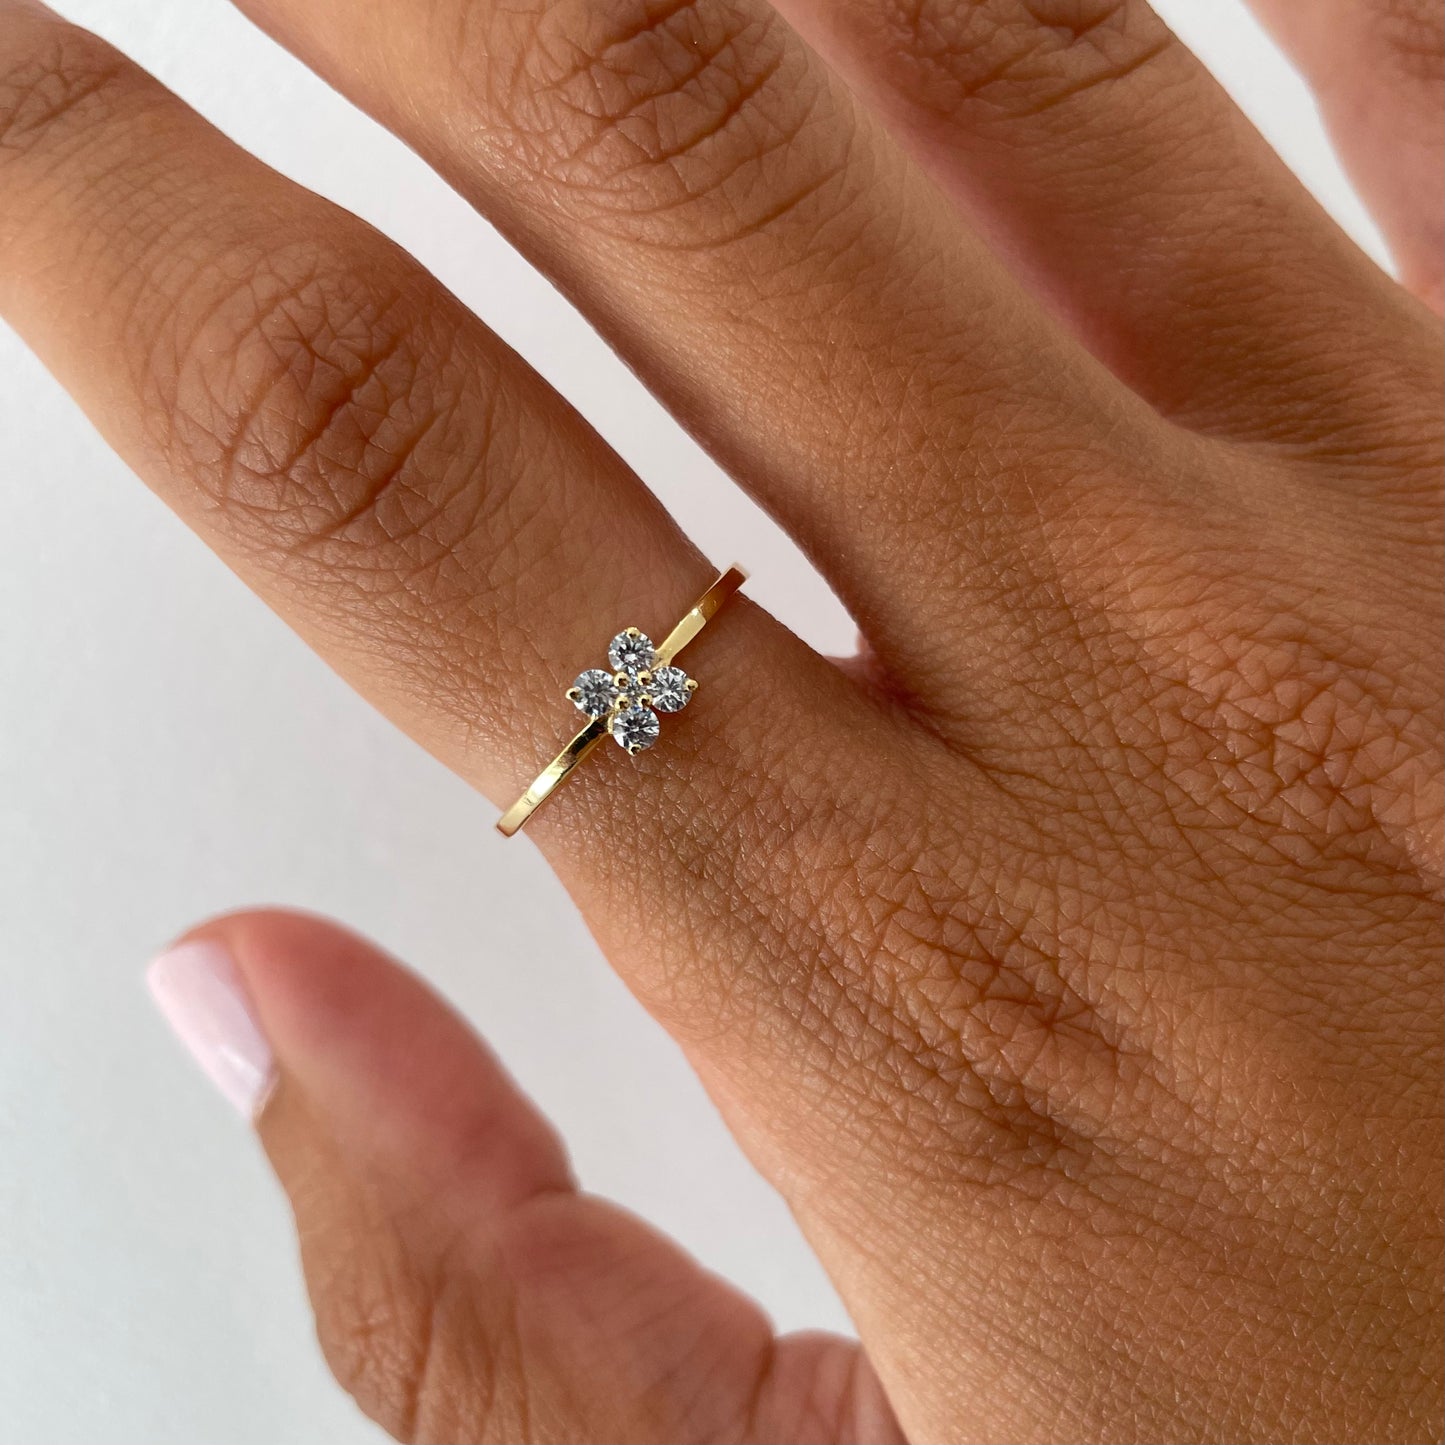 "Thea" Flower Diamond Ring - - Jewelry - Goldie Paris Jewelry - Ring